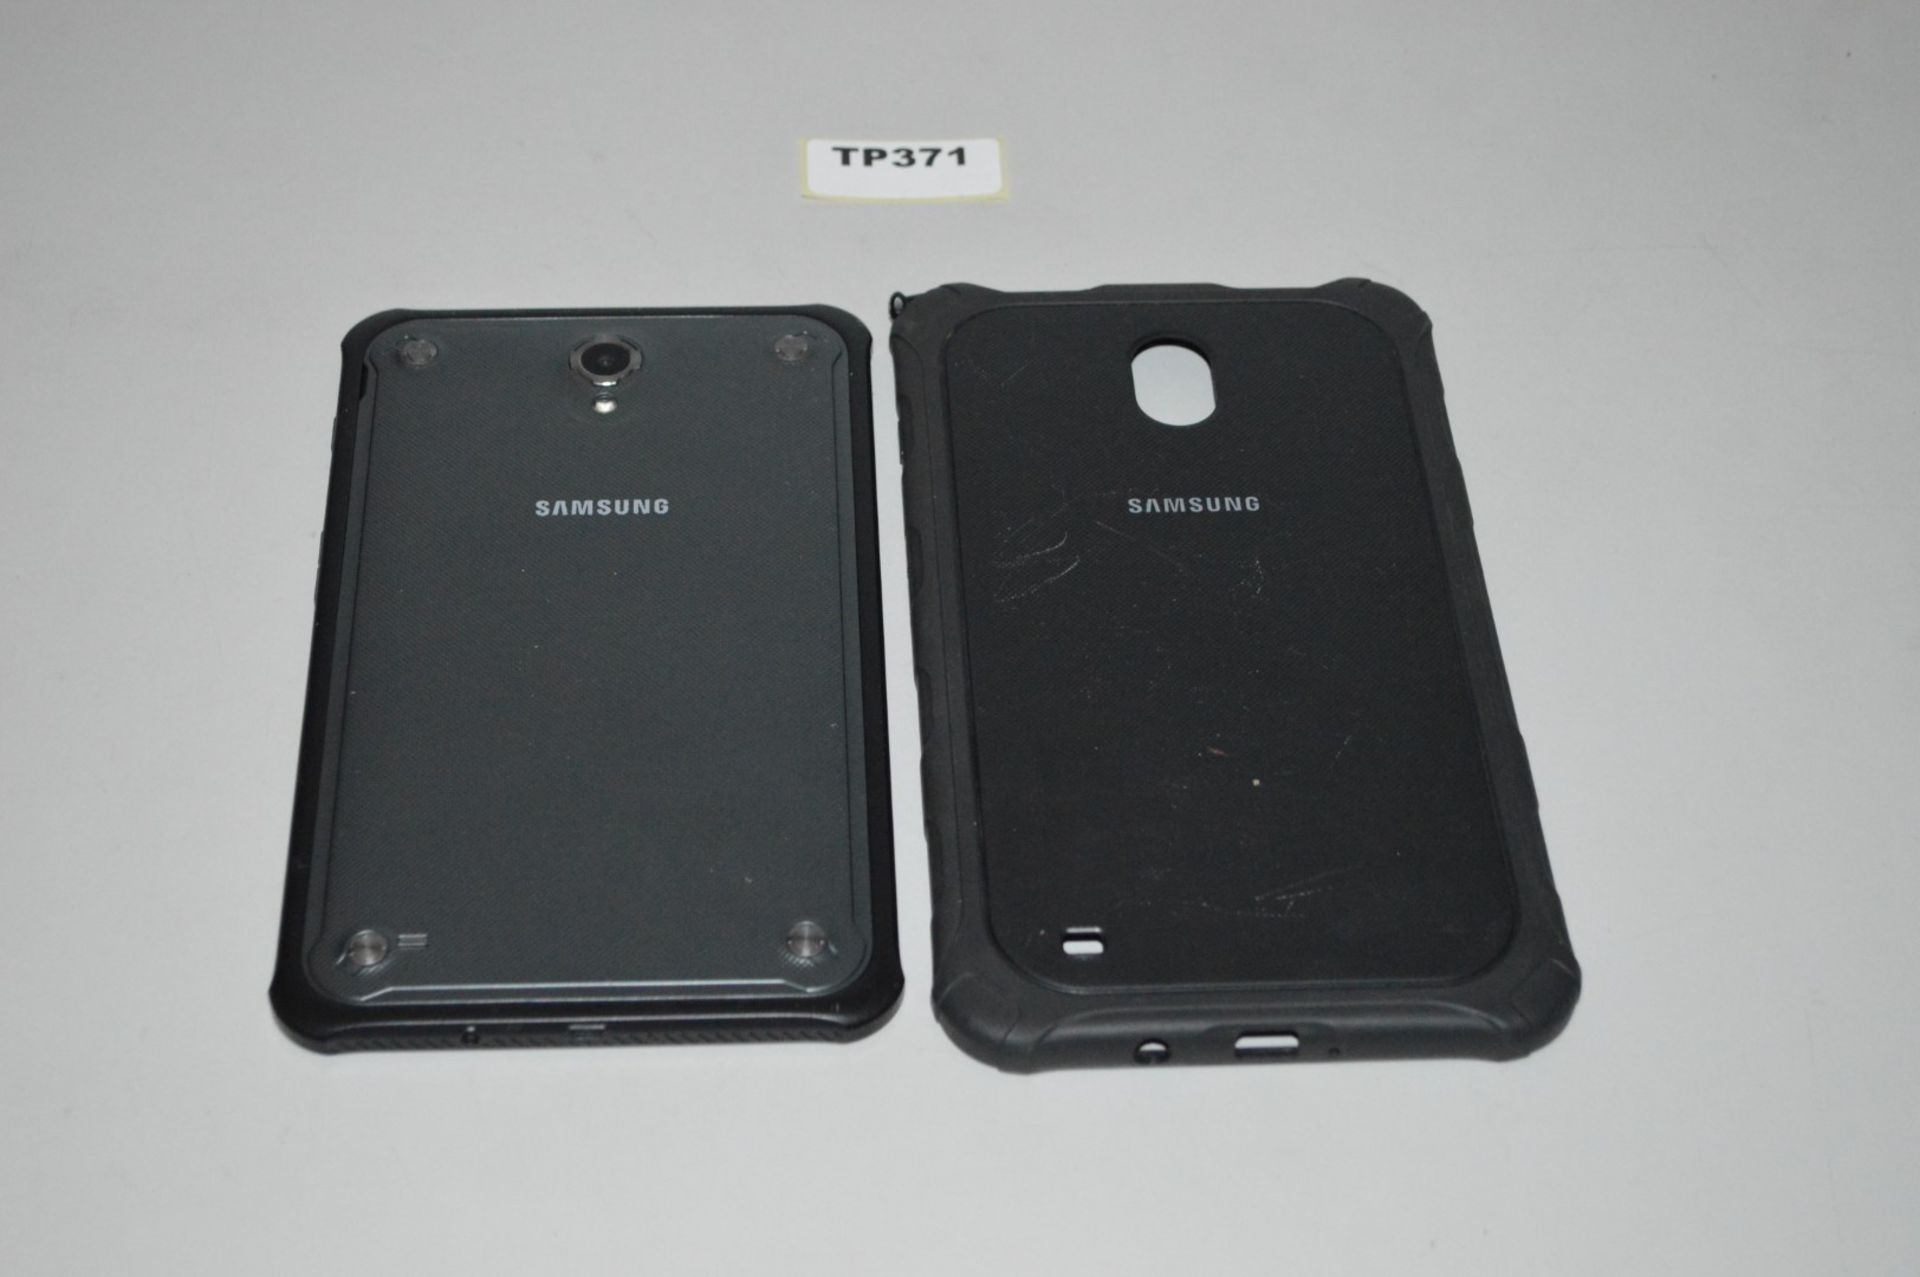 1 x SAMSUNG Galaxy Tab Active 8.0 SM-T365 16GB Tablet - Ref TP371 - Image 4 of 4